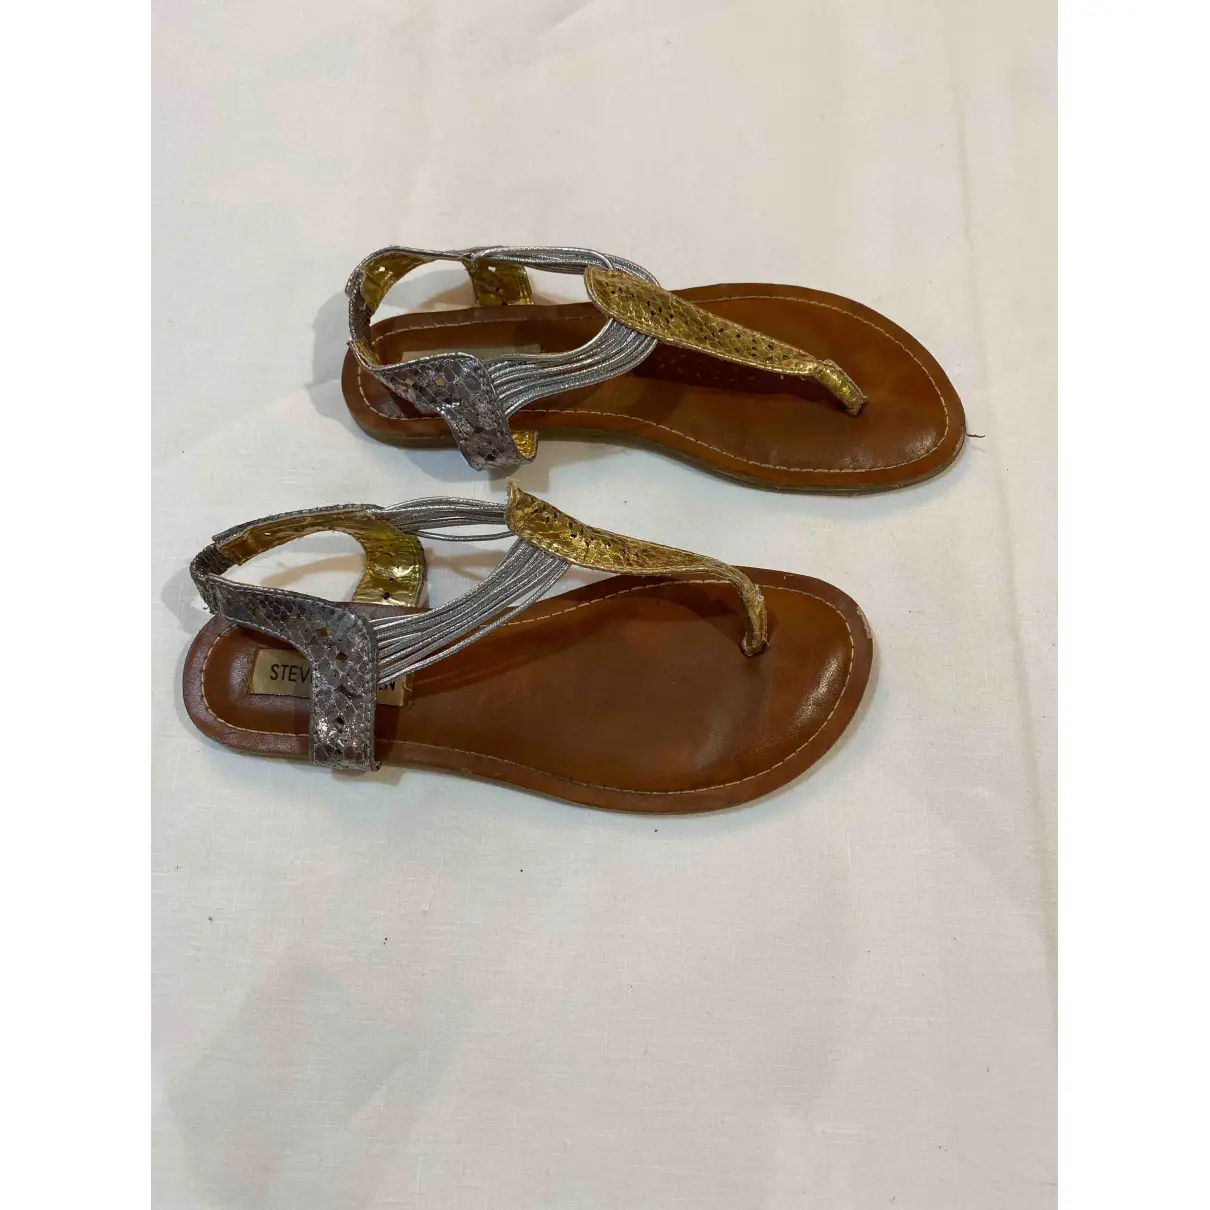 Buy Steve Madden Leather sandals online